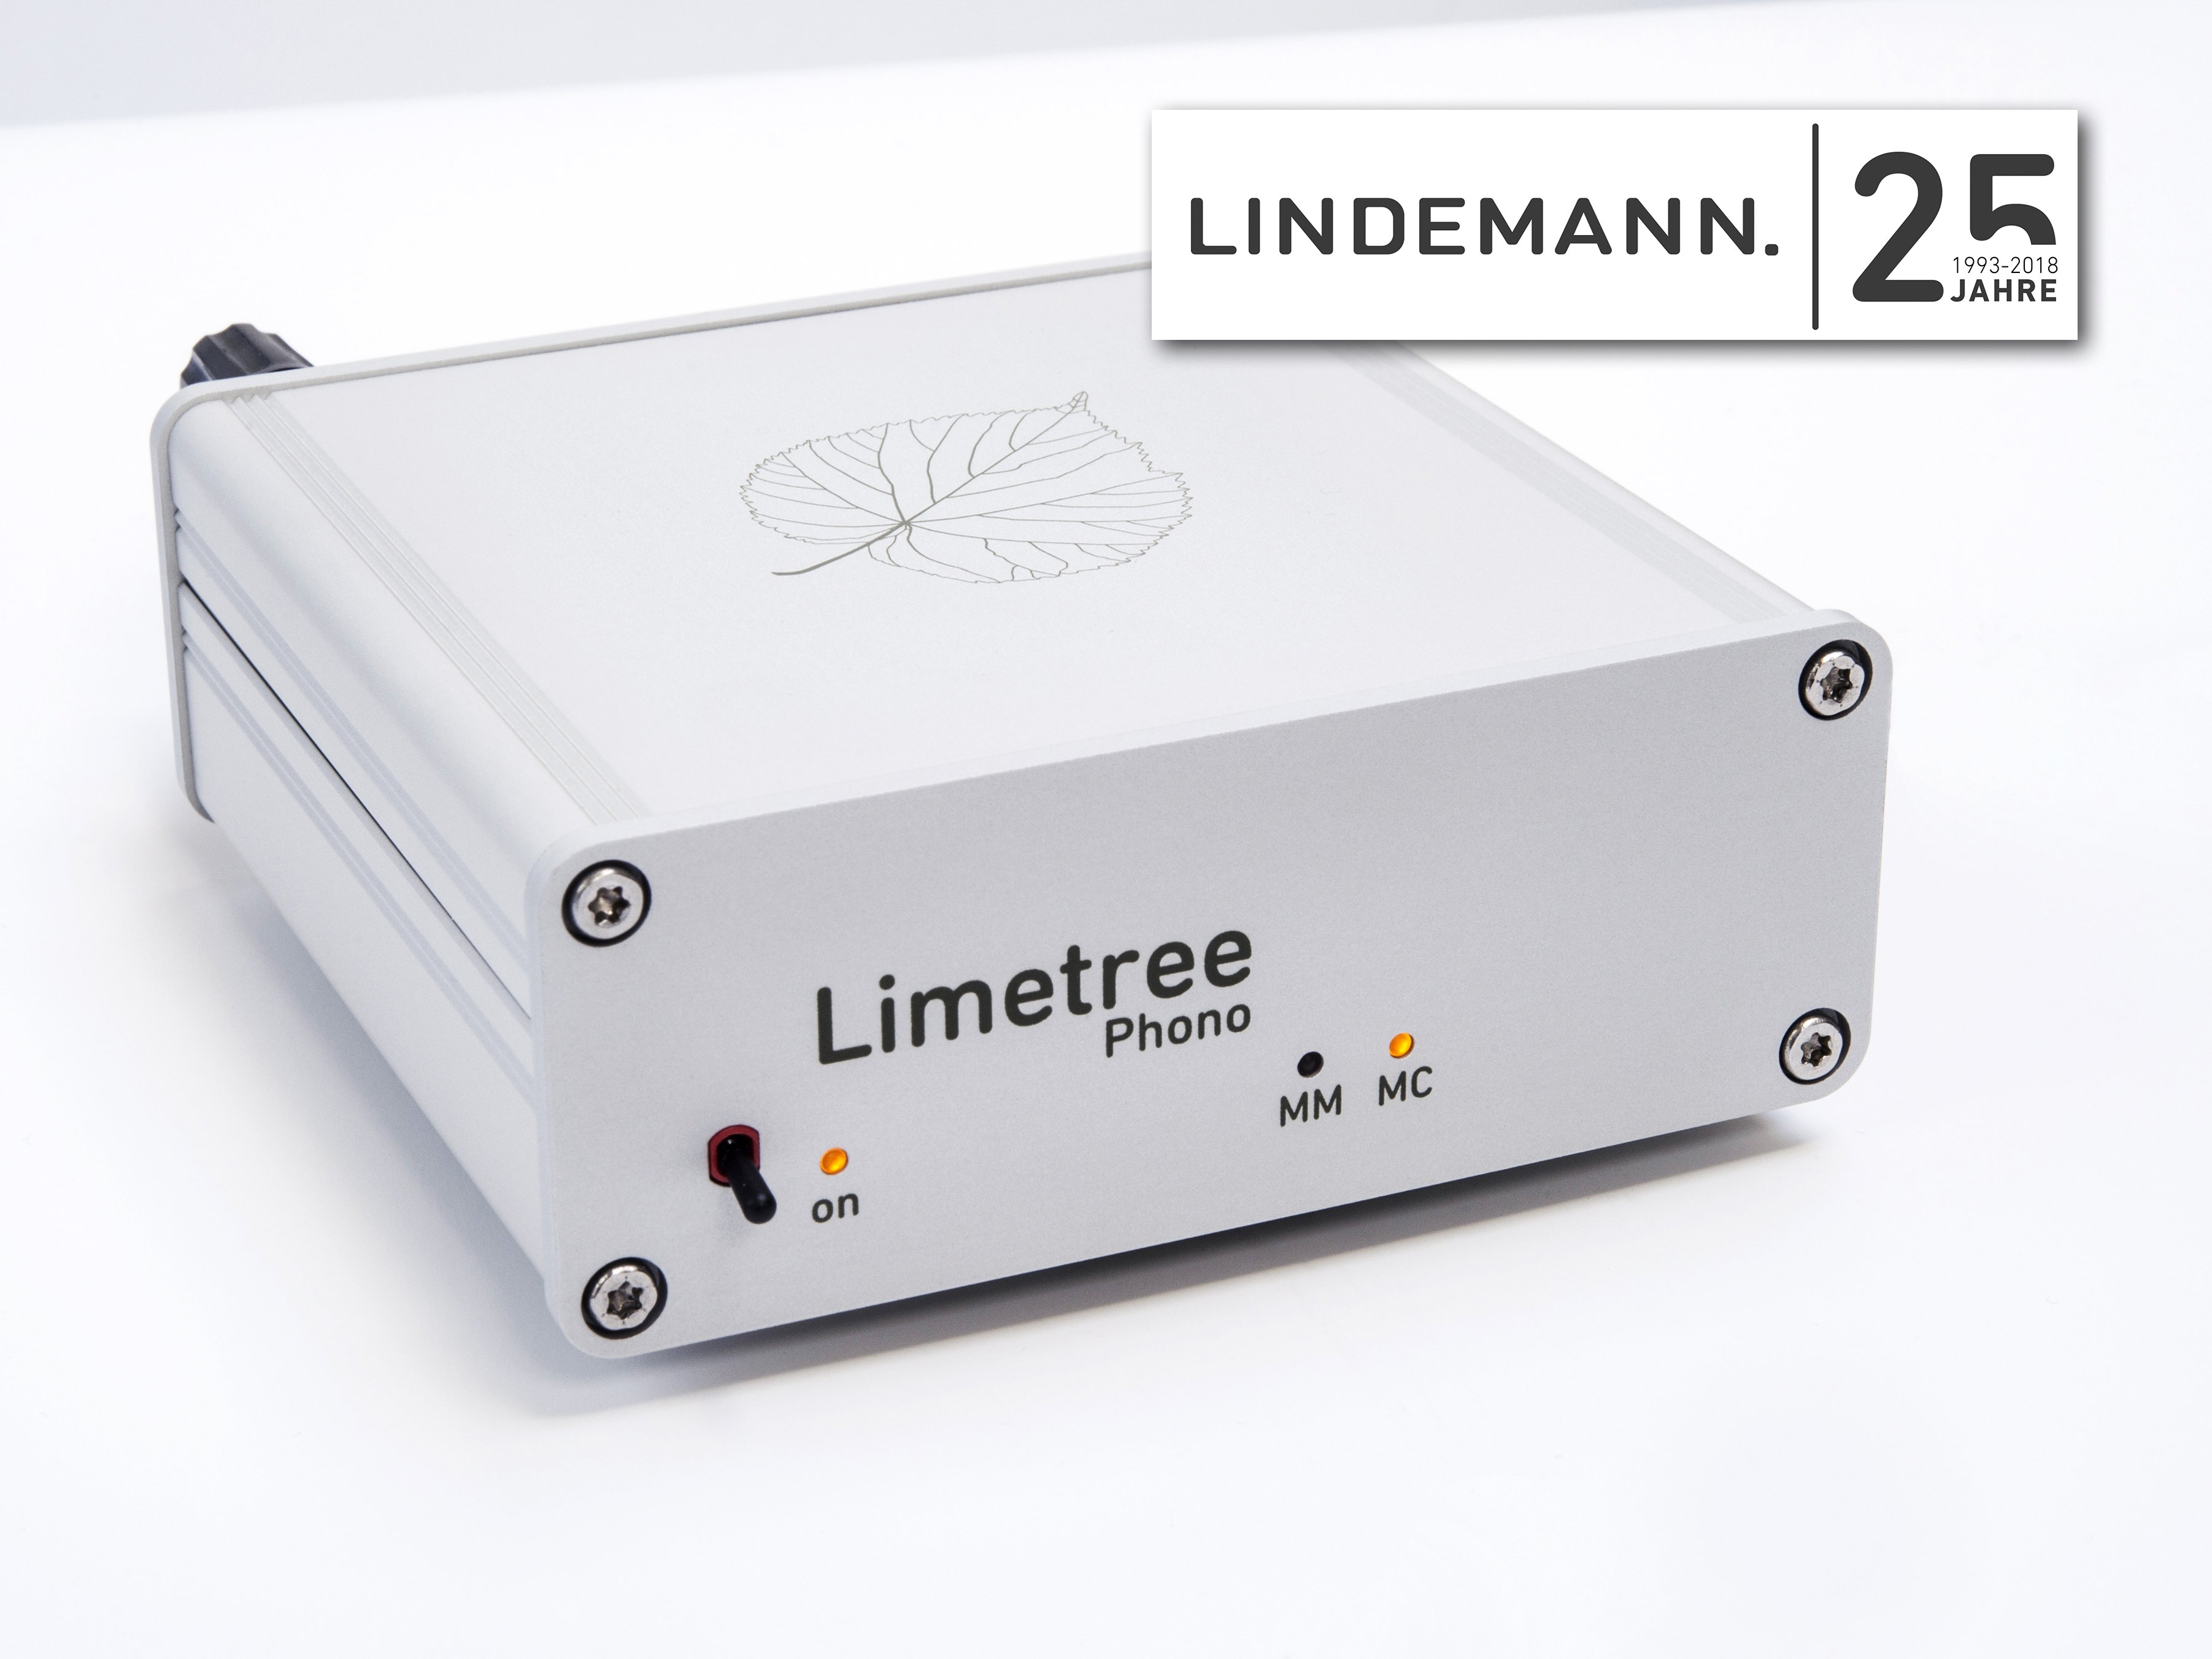 Limetree Phono (Bild: Lindemann)